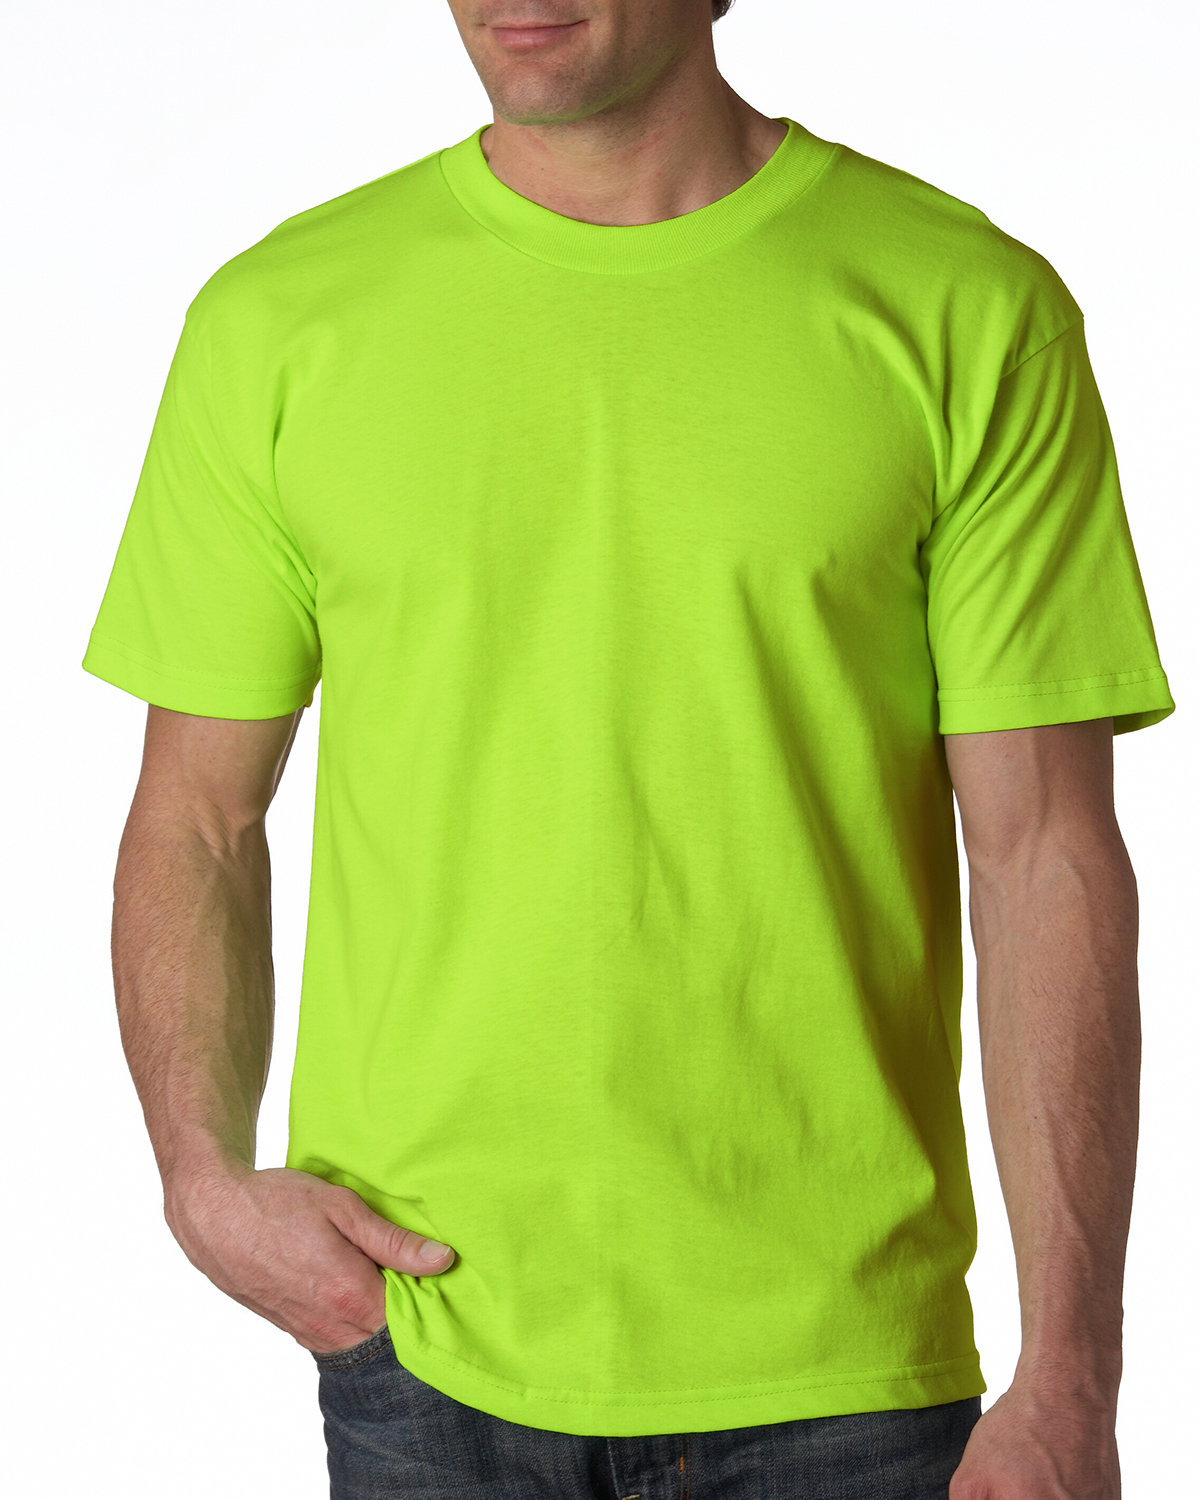 Bayside Unisex T-Shirt alphabroder Union-Made 